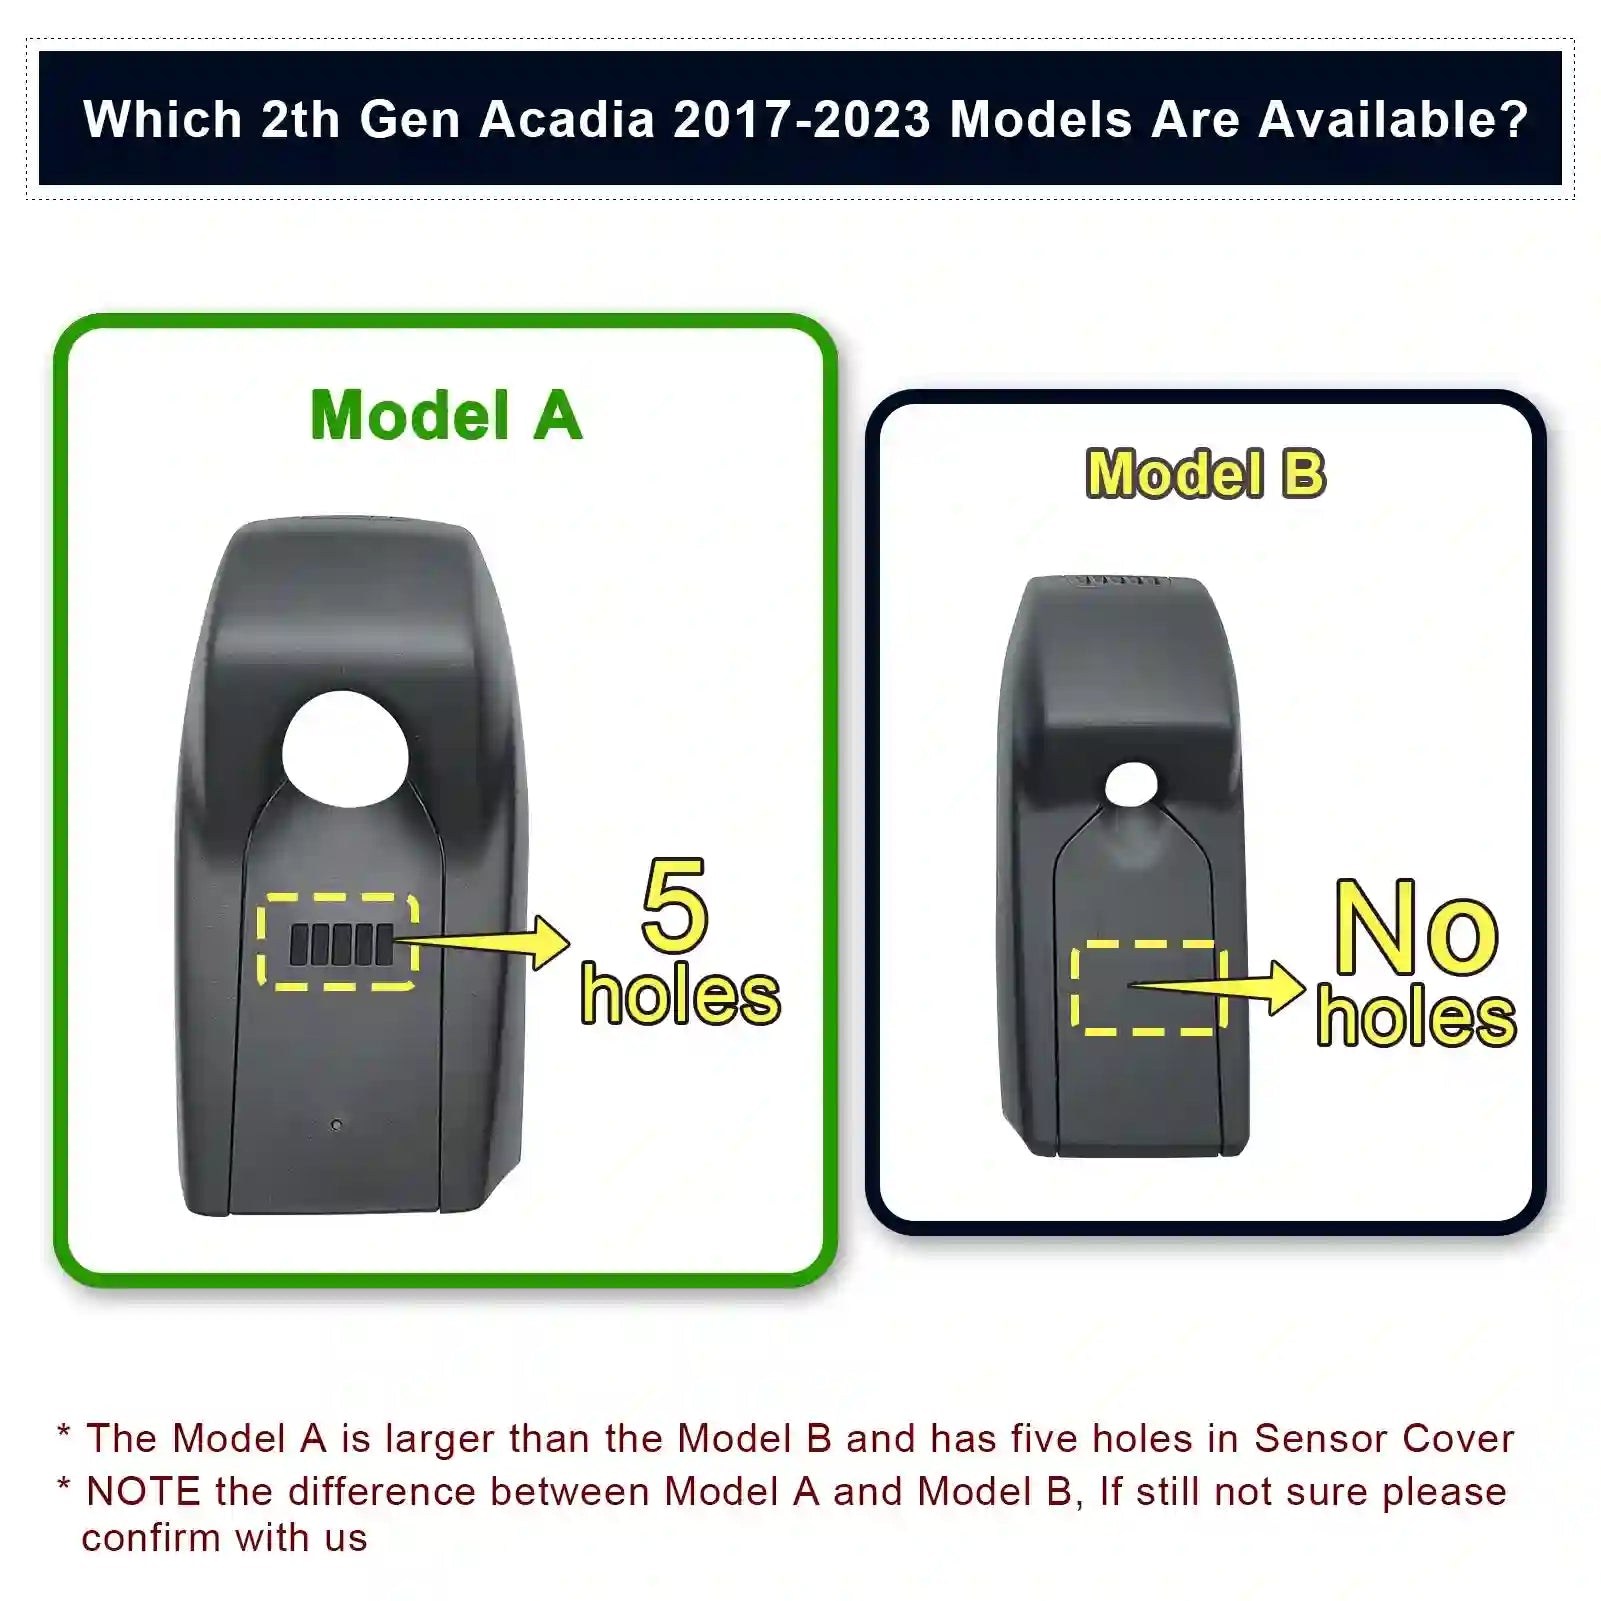 Mangoal Front 4K & Rear 1080p Dash Cam fit for GMC Acadia 2017-2023 (Model A), SE SEL Set AT4 Denali, Integrated OEM Look, UHD 2160P Video, G-Sensor, App & WiFi, 128GB Card